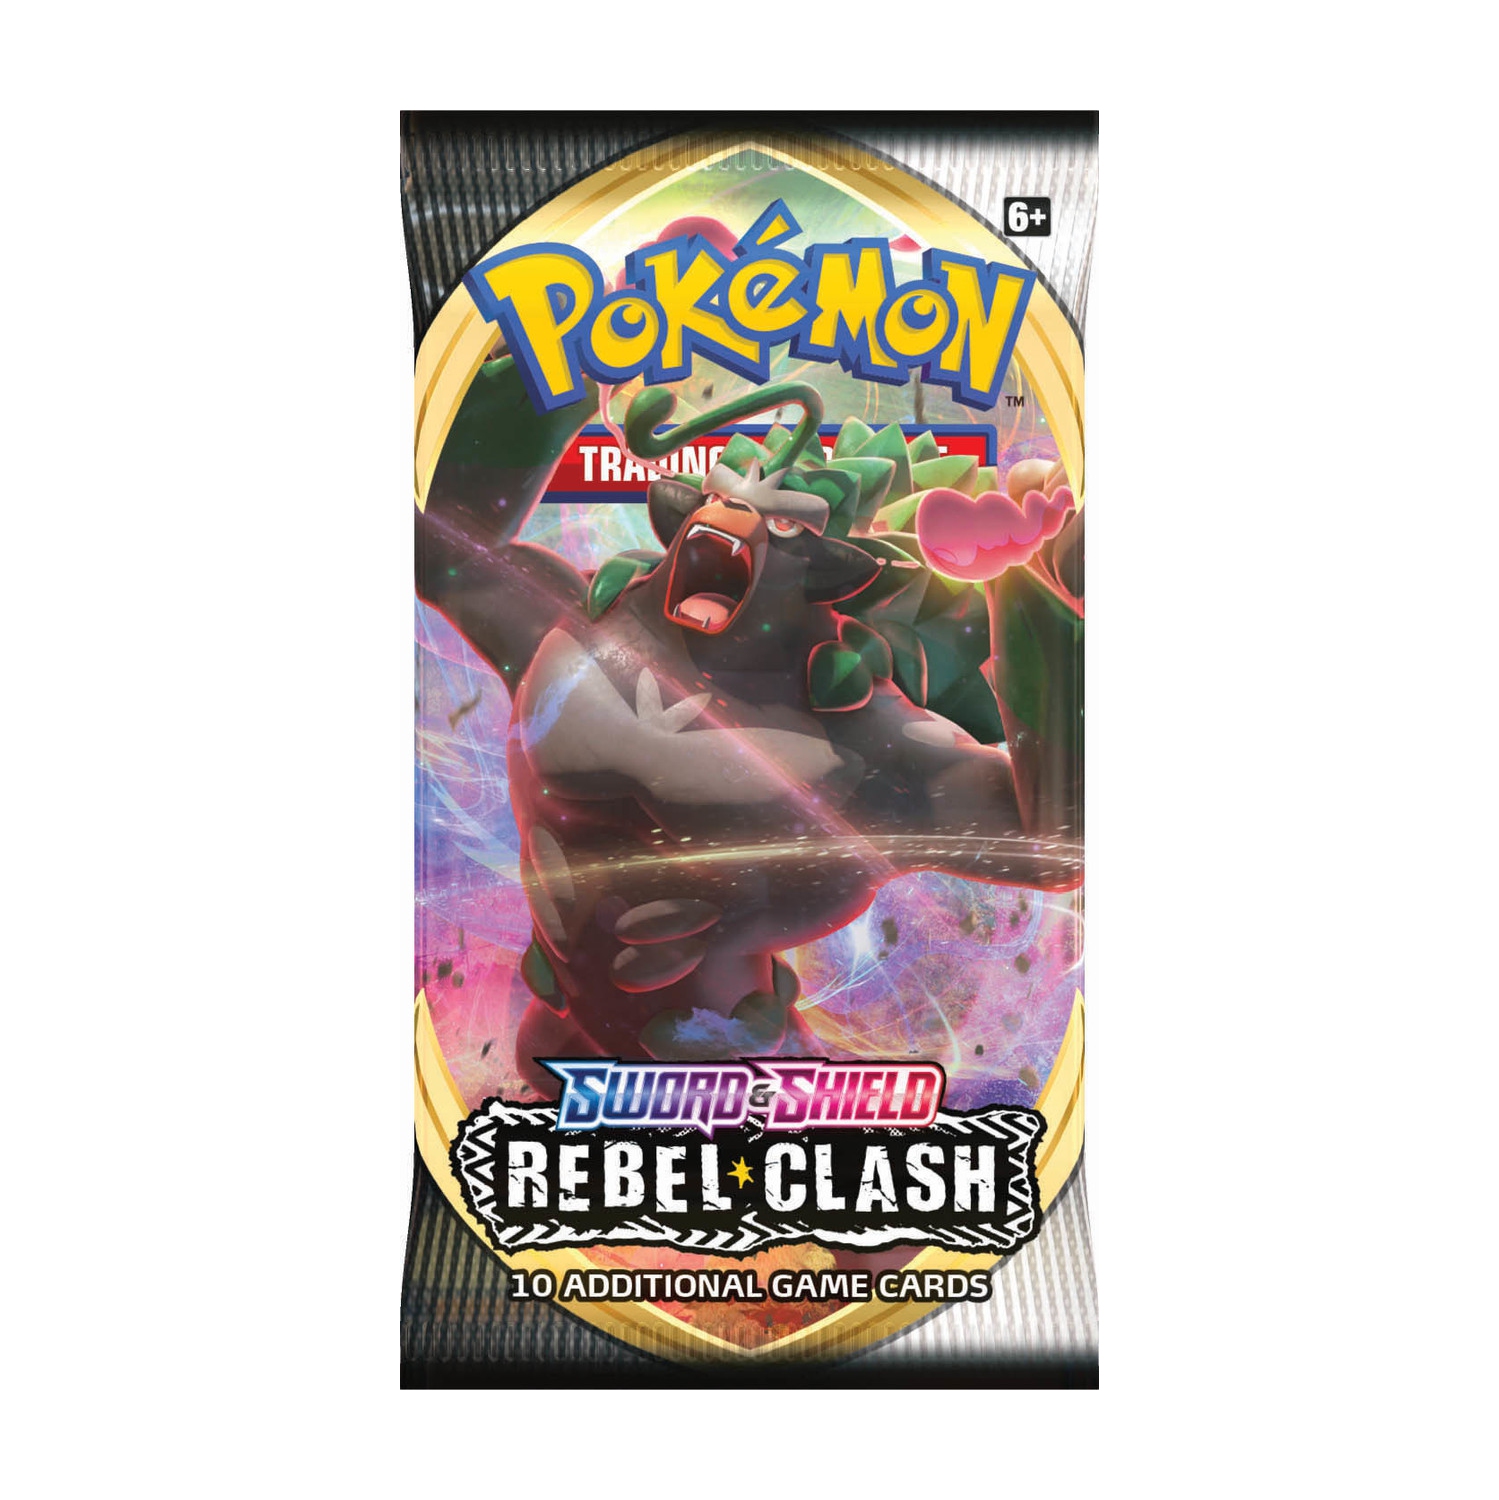 Pokemon USA Pokemon Trading Card Game: Sword & Shield (SWSH2) Rebel Clash Booster Pack 10 cards per pack